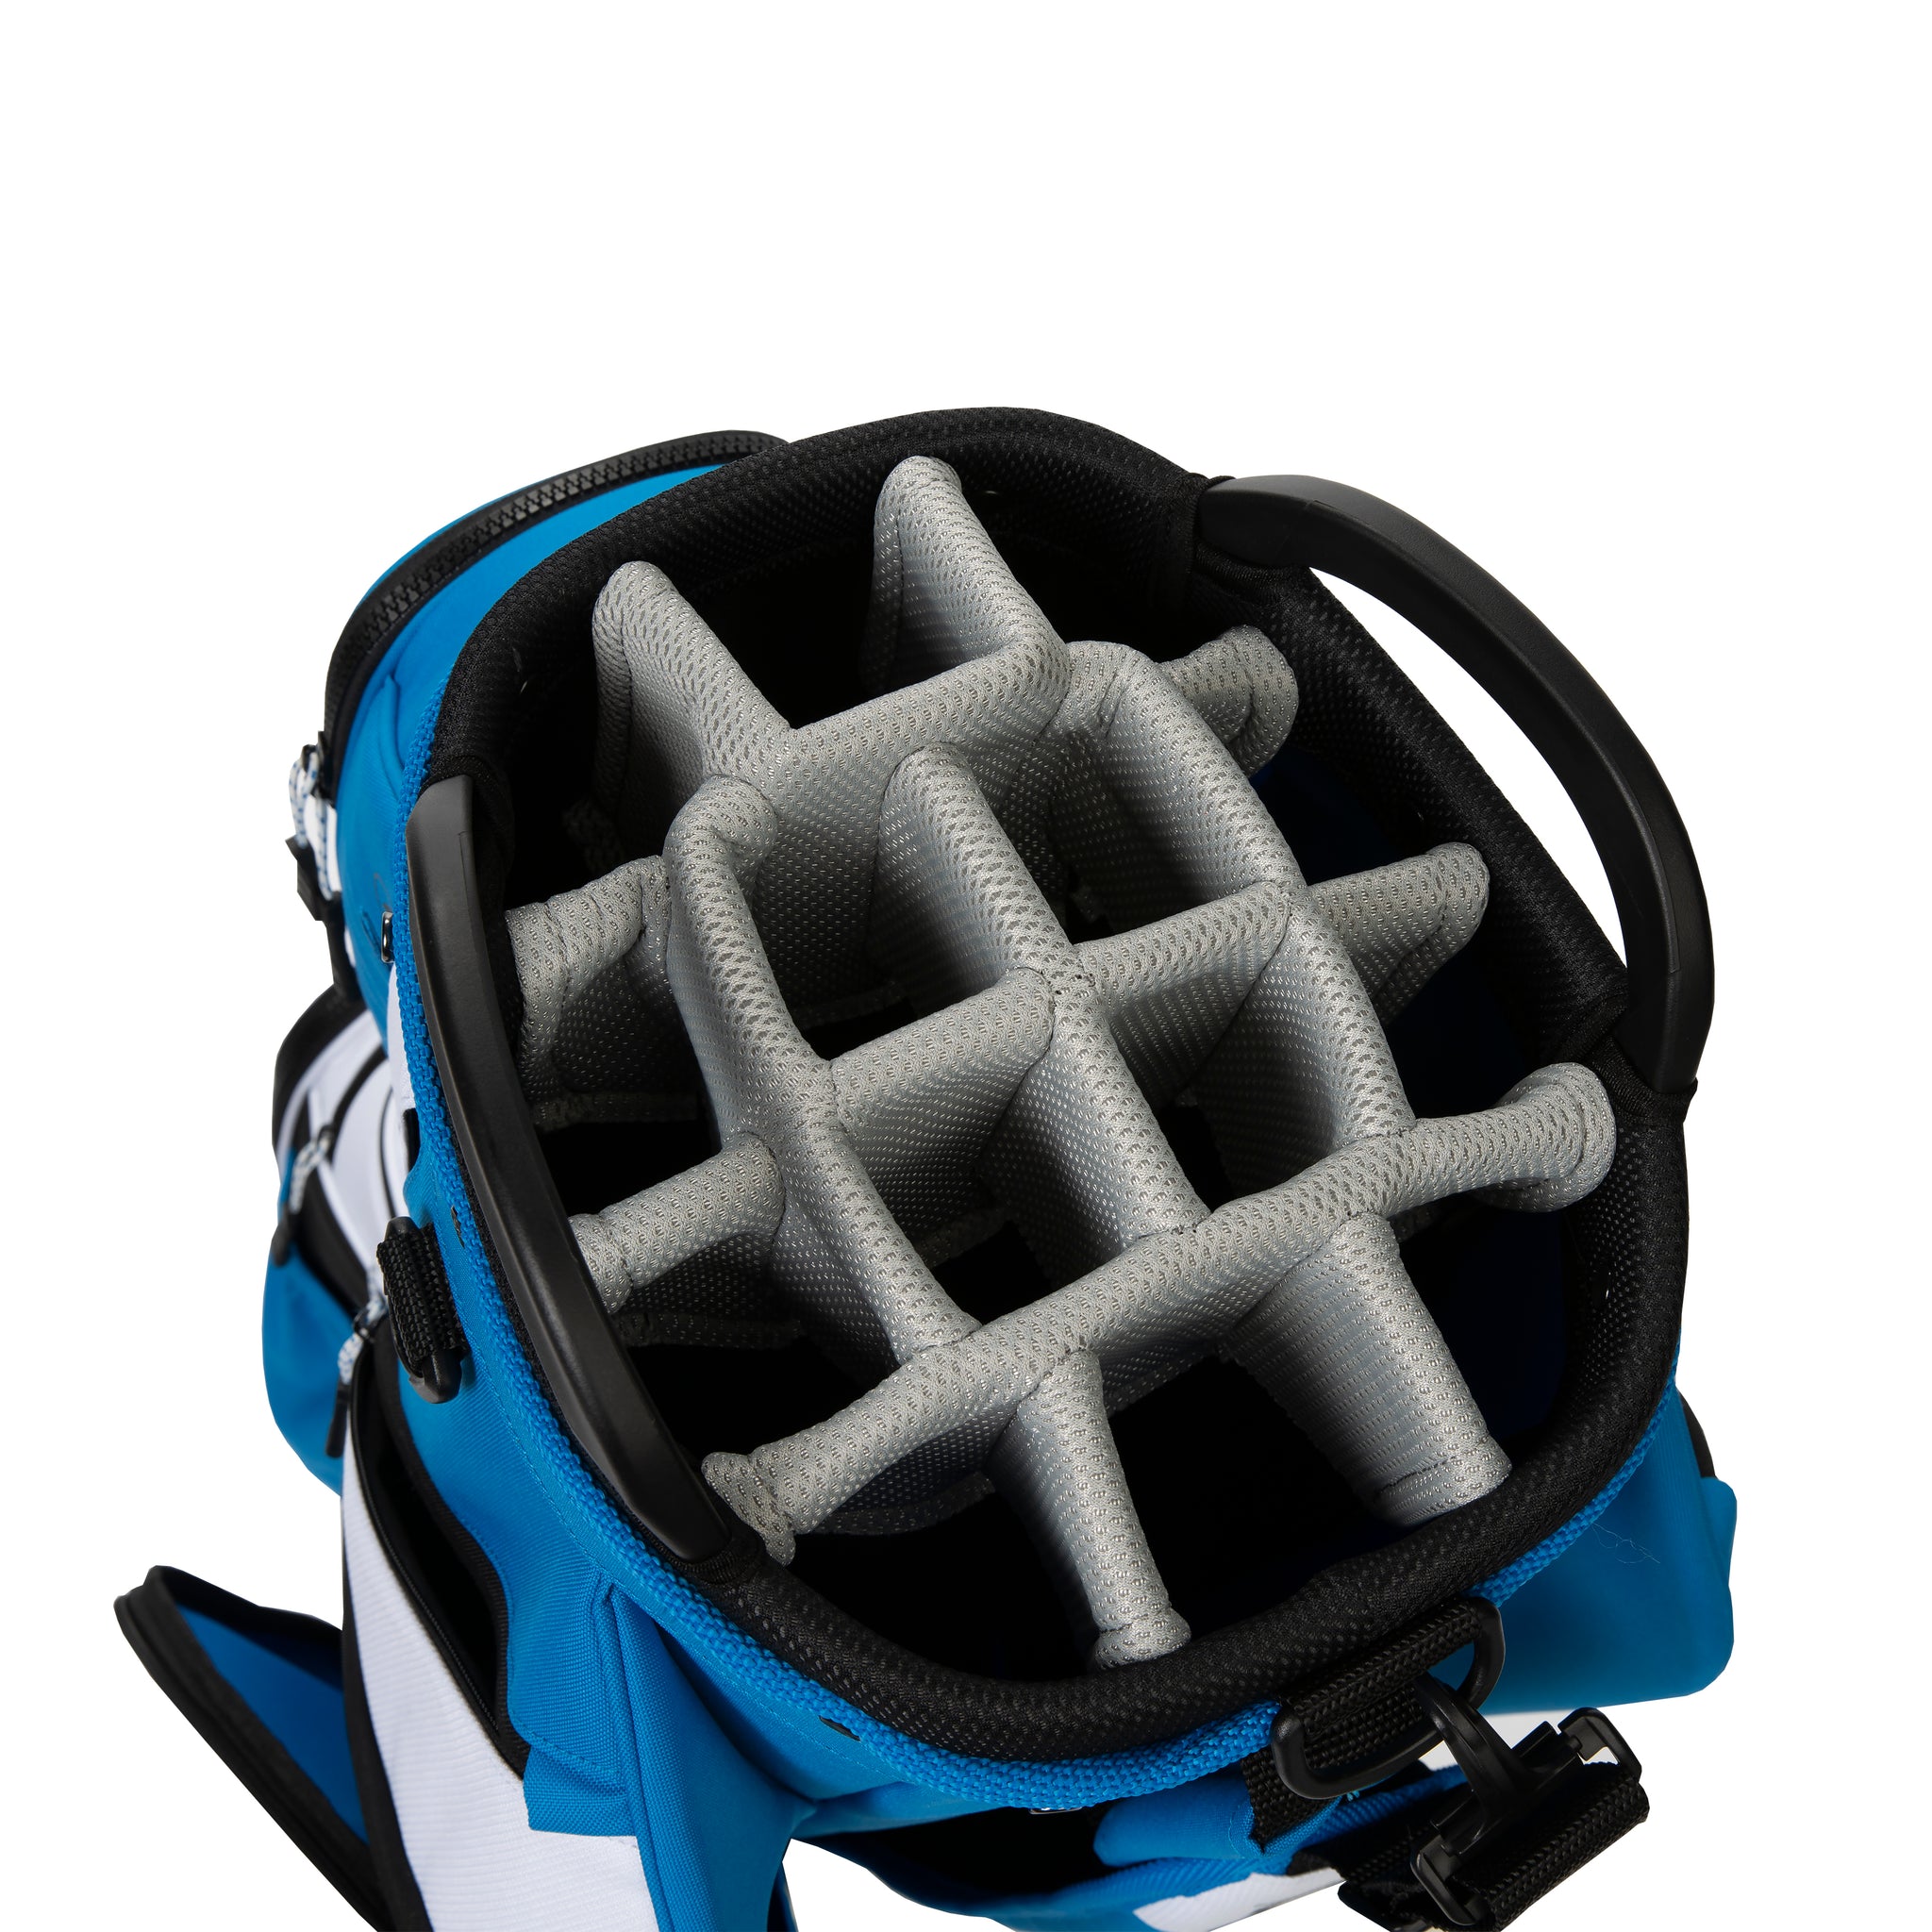 Cobra Golf Ultralight Pro Cart Bag